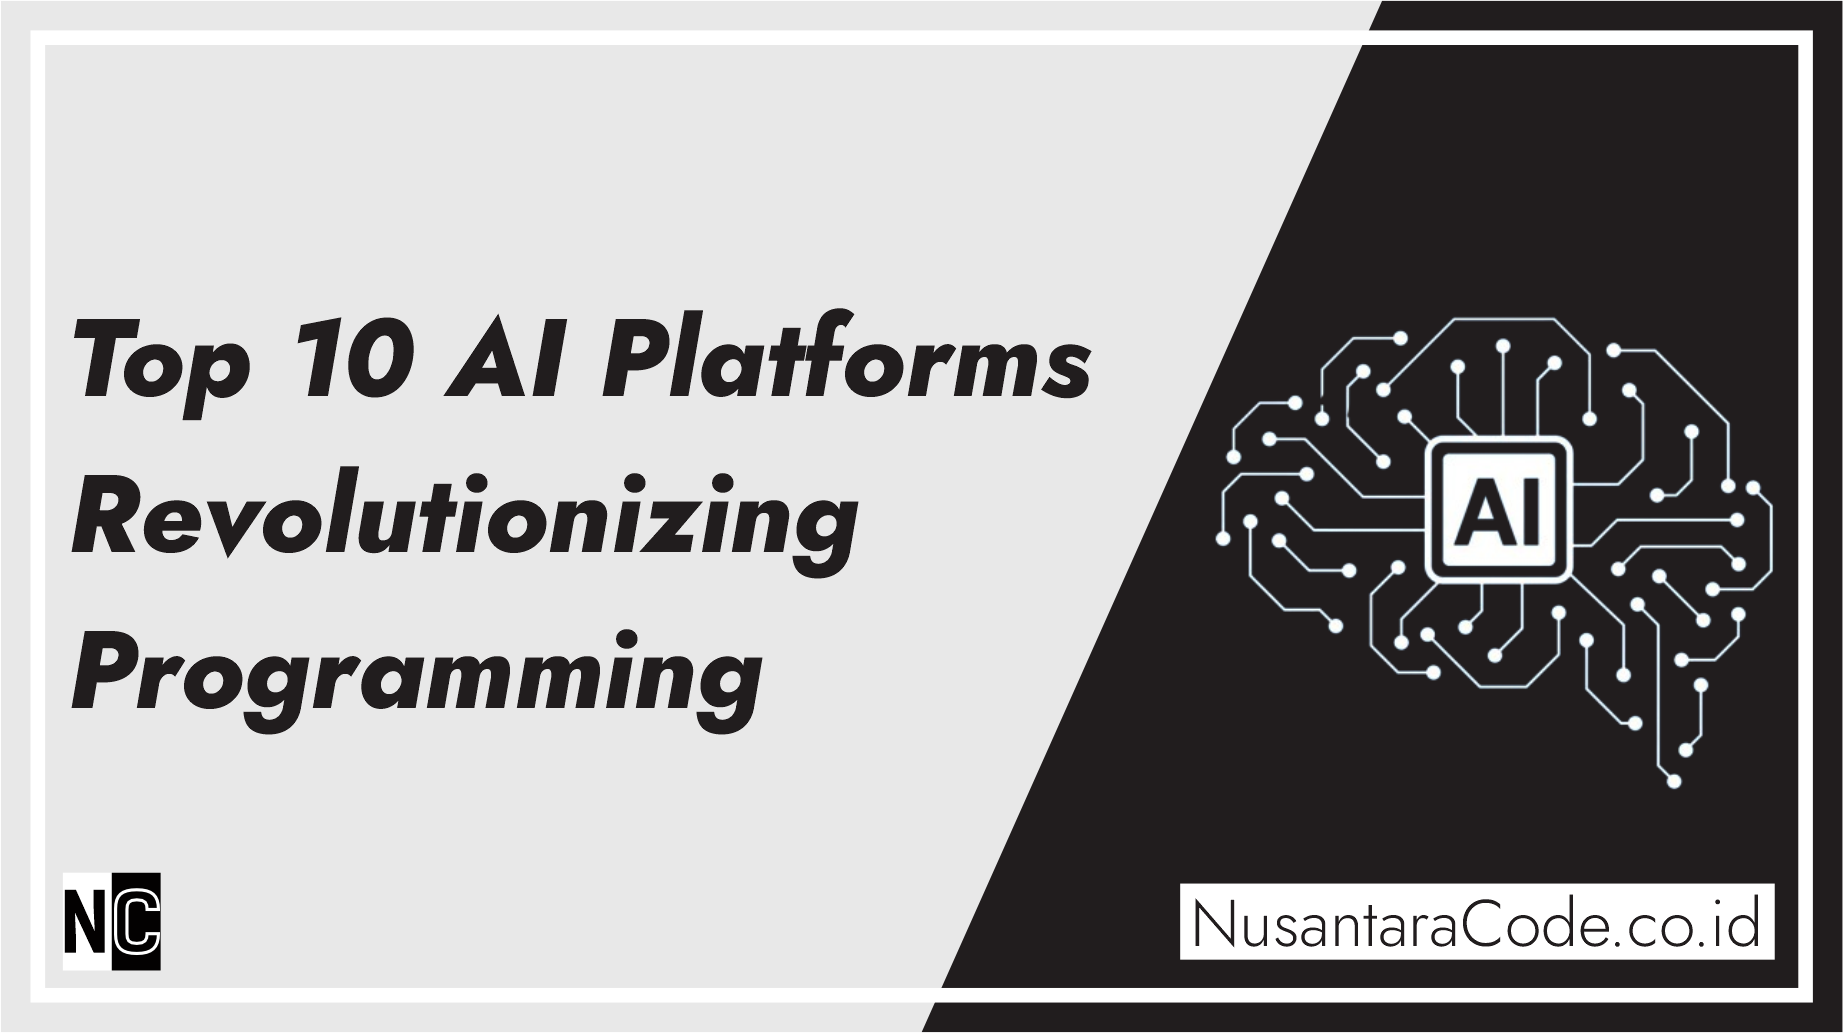 Top 10 AI Platforms Revolutionizing Programming